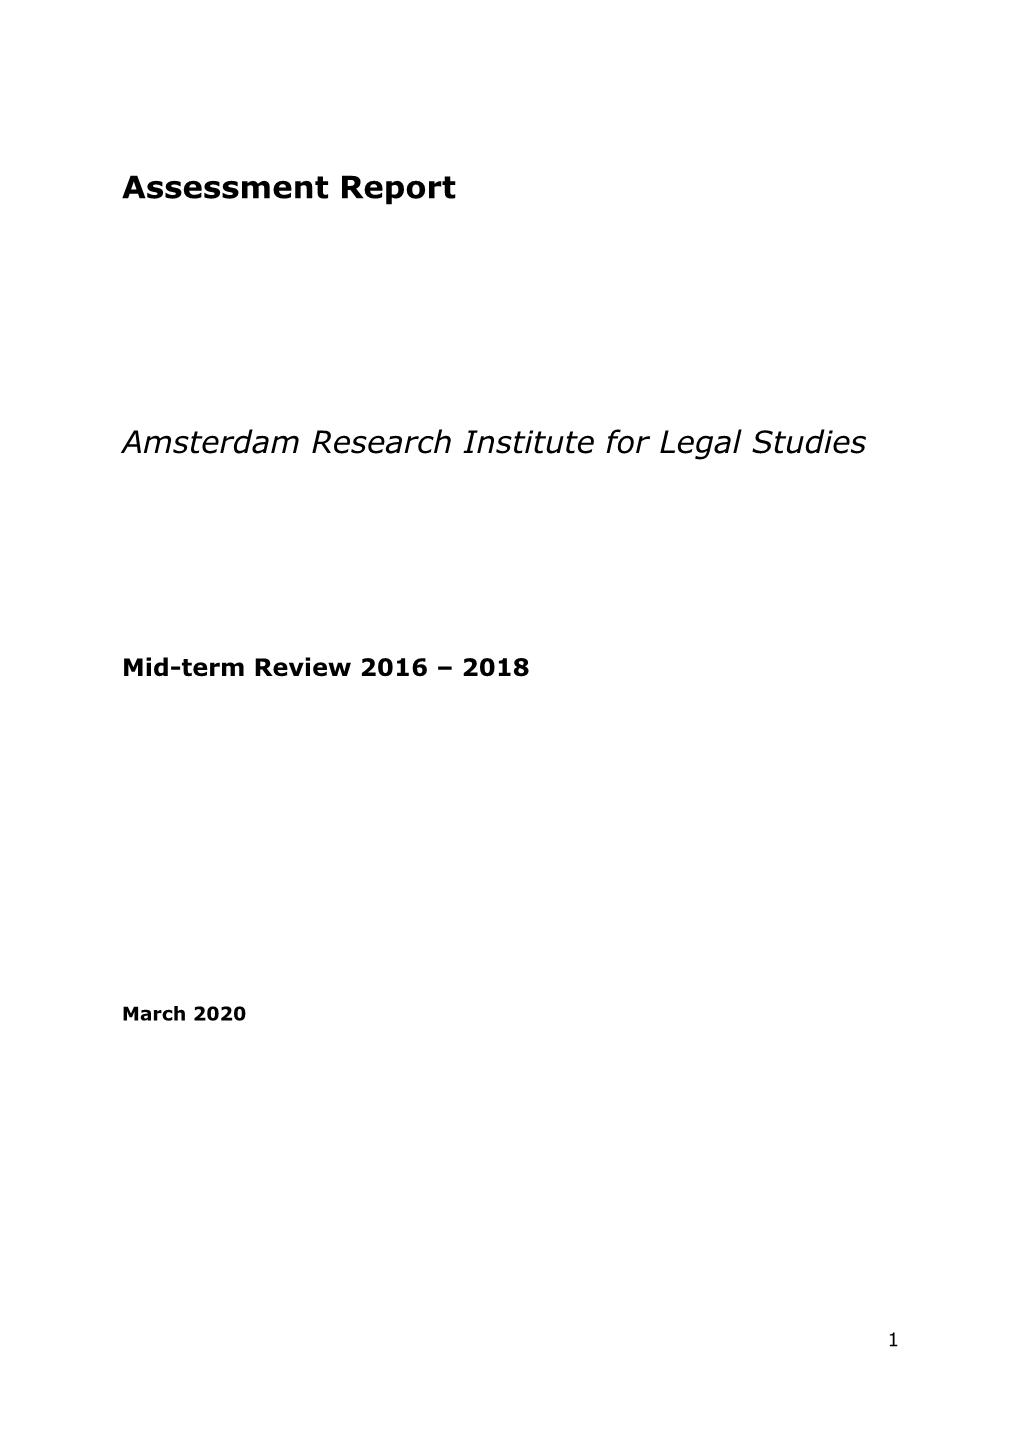 Assessment Report Amsterdam Research Institute for Legal Studies